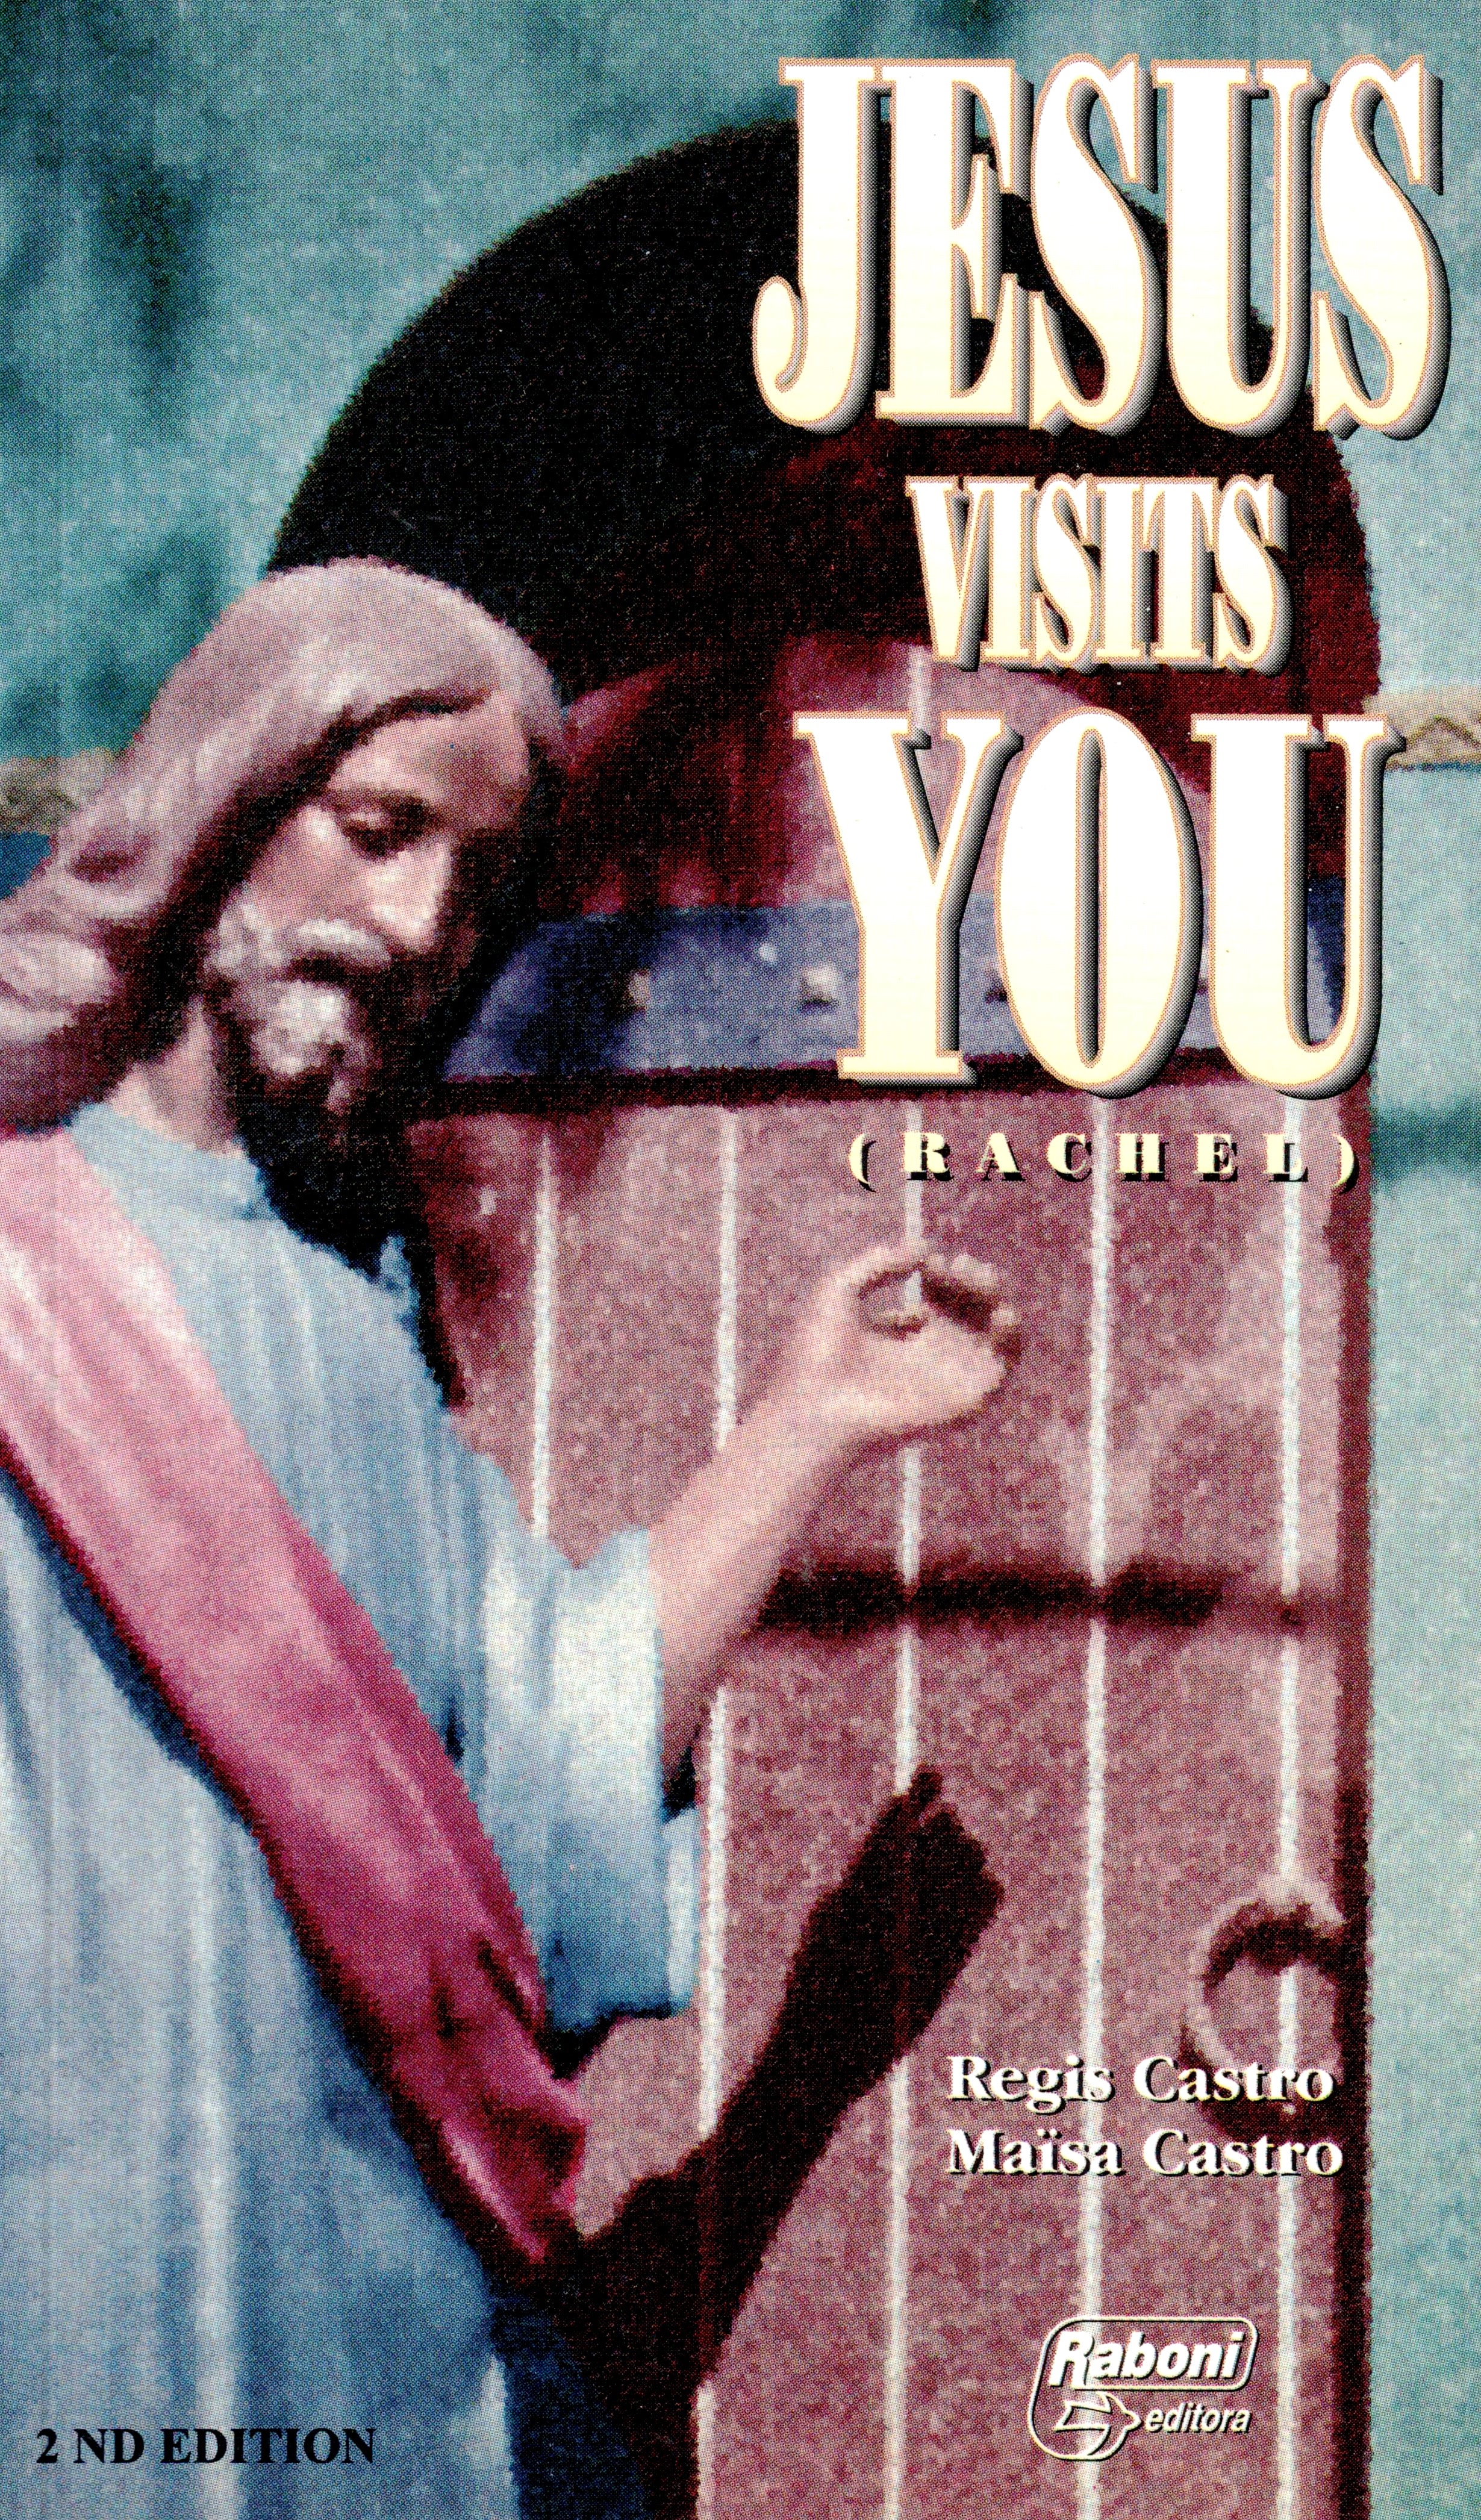 Jesus visits you